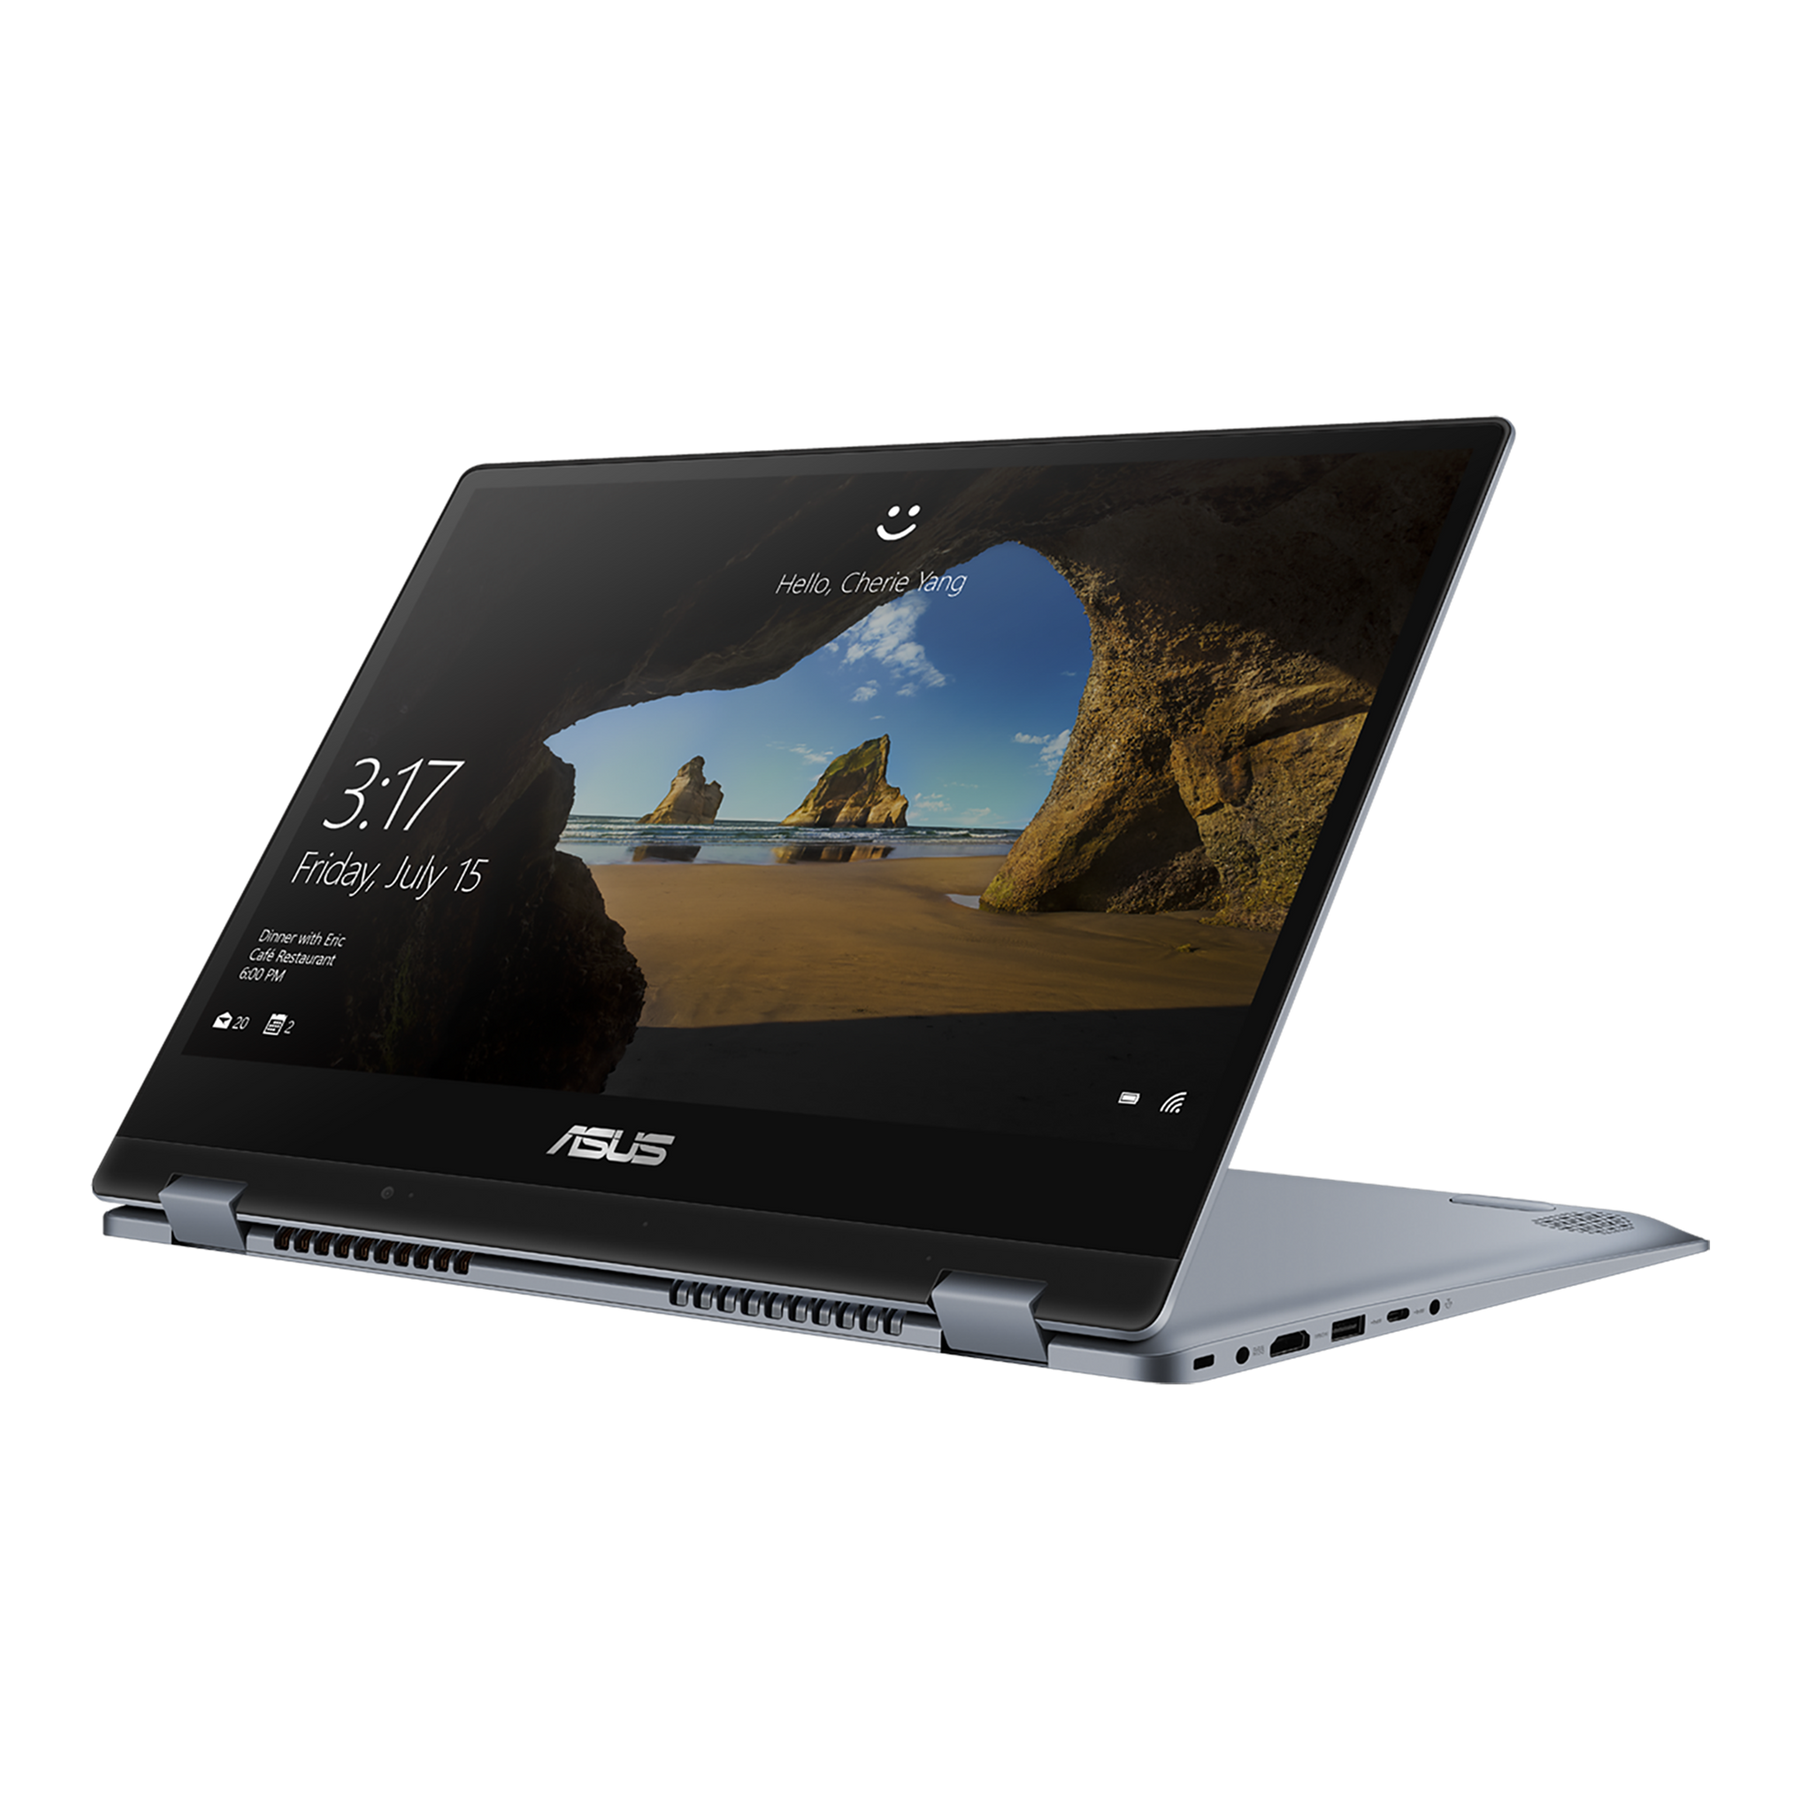 Asus VivioBook Flip 14" (TP412UA) Laptop i3-7020U 128GB 4GB RAM - Very Good Condition